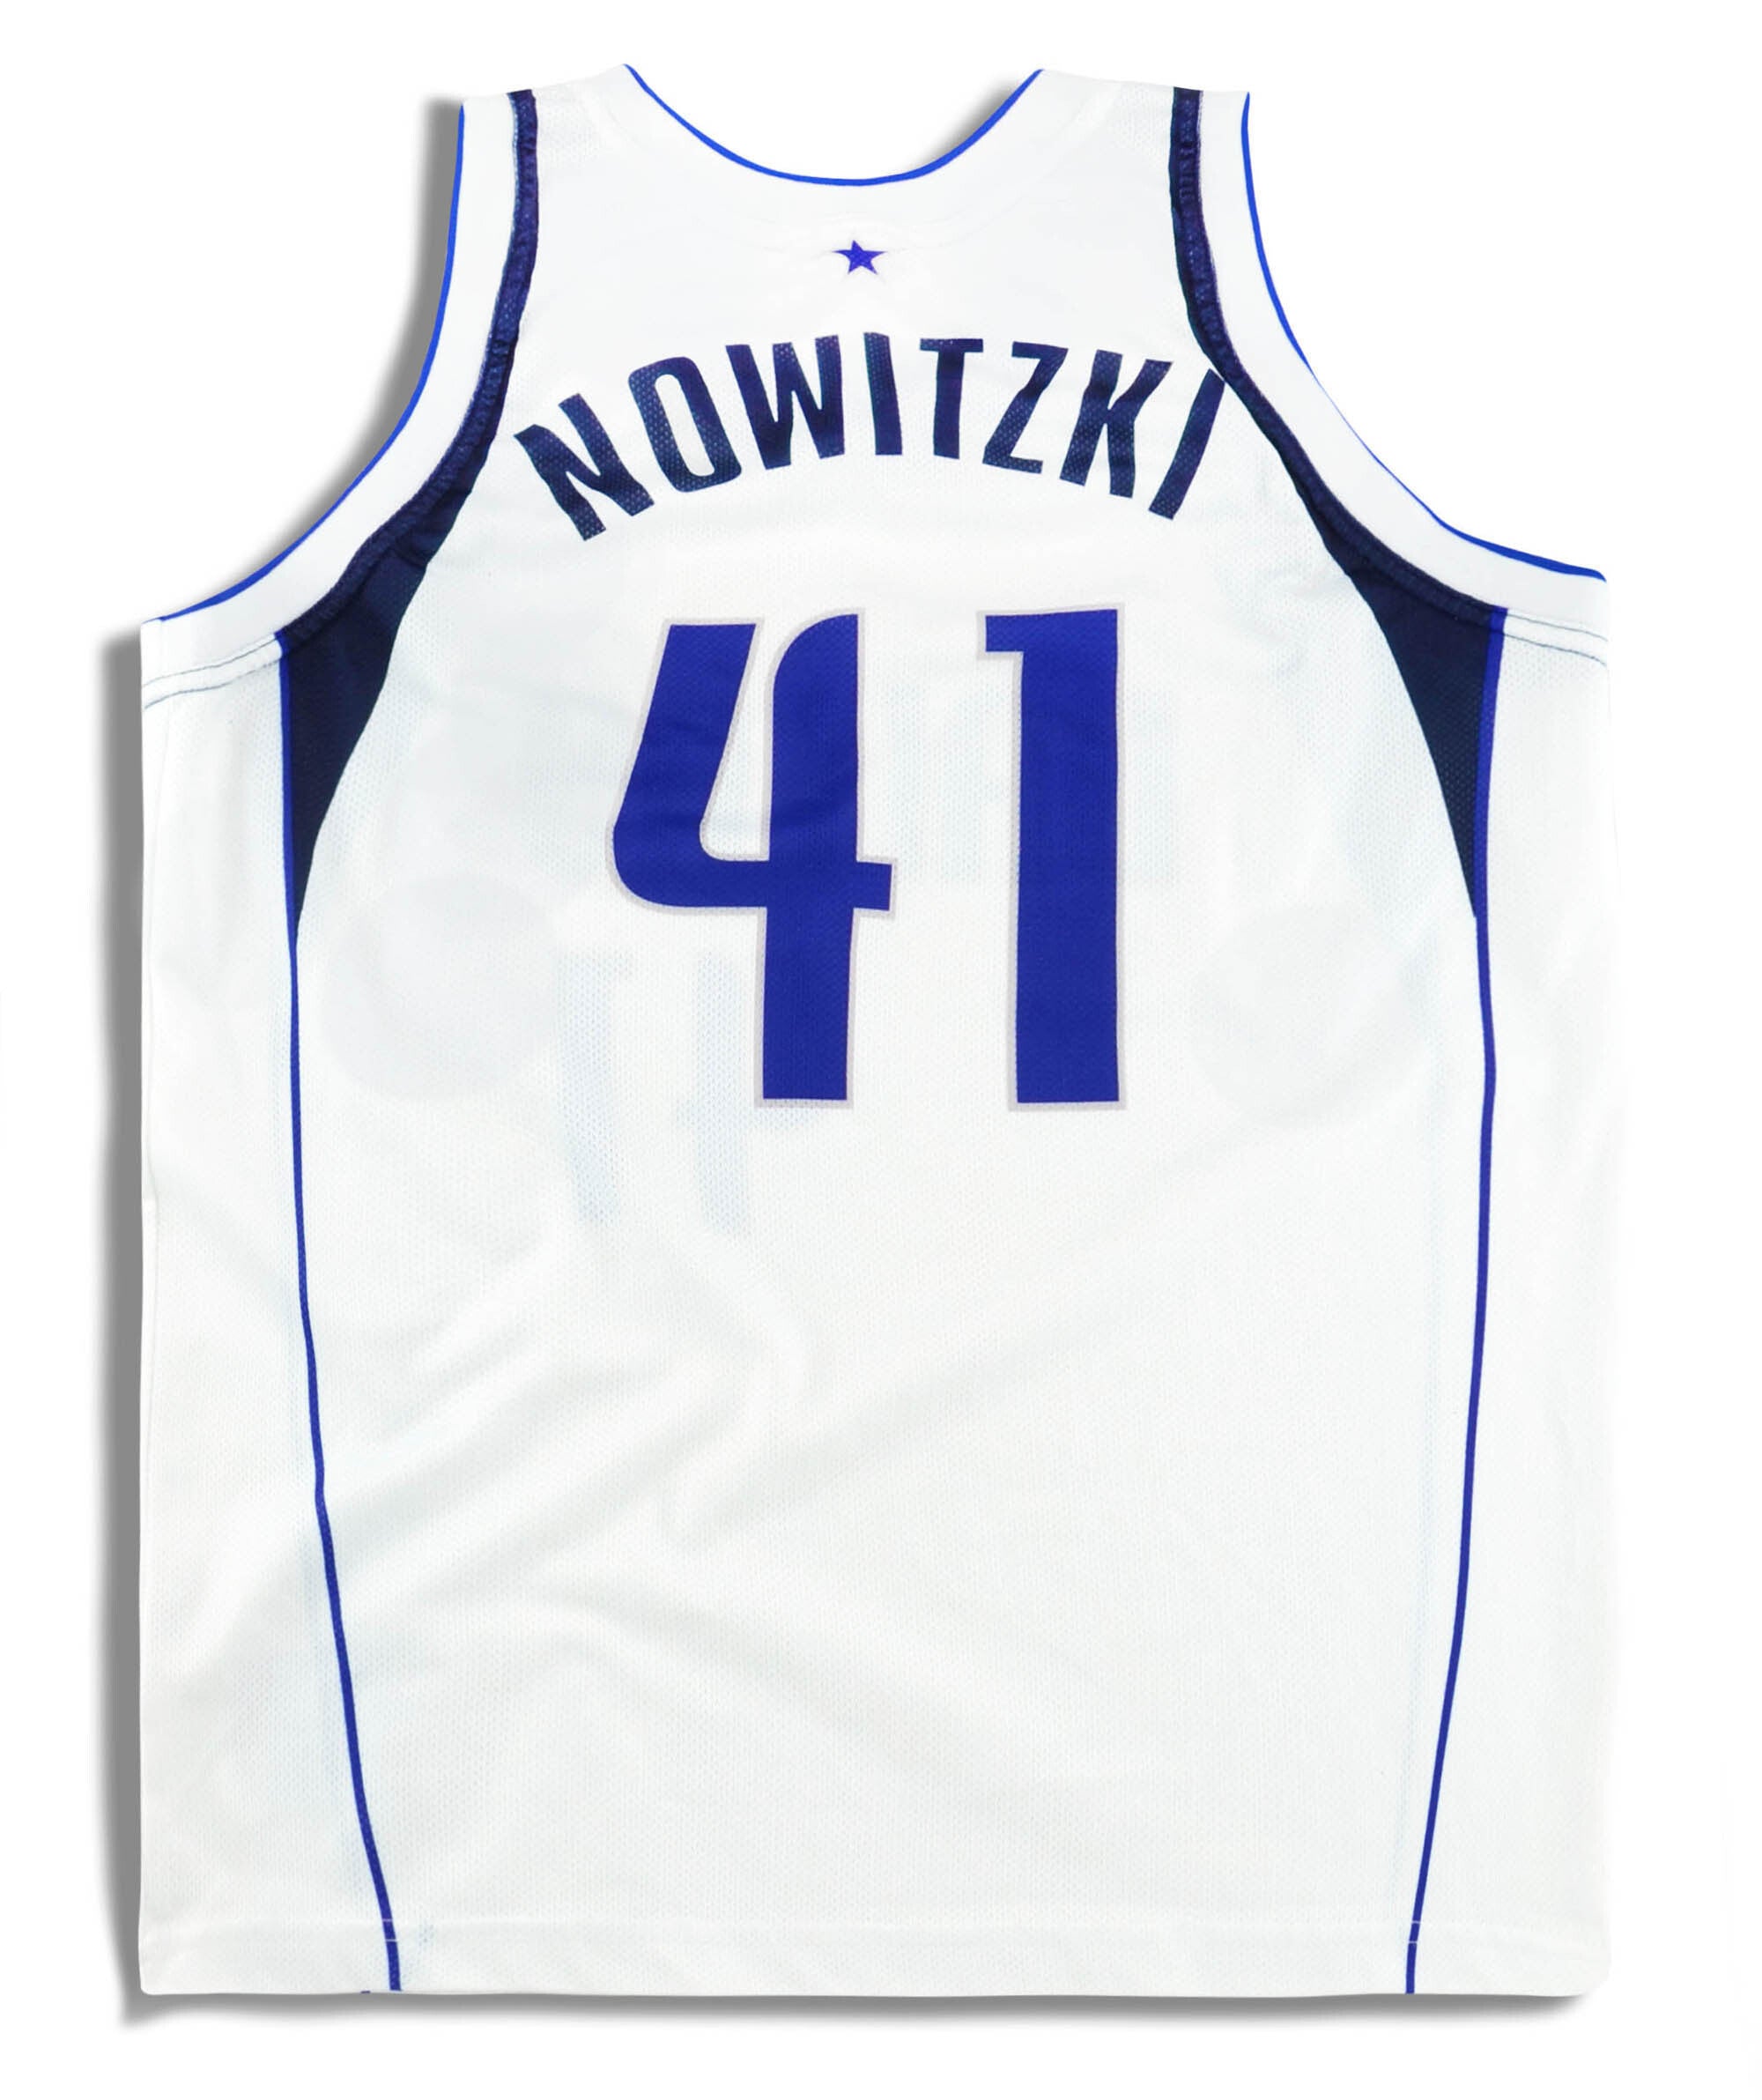 Adidas Dallas Mavericks Mavs #41 Dirk Nowitzki NBA Jersey Mens